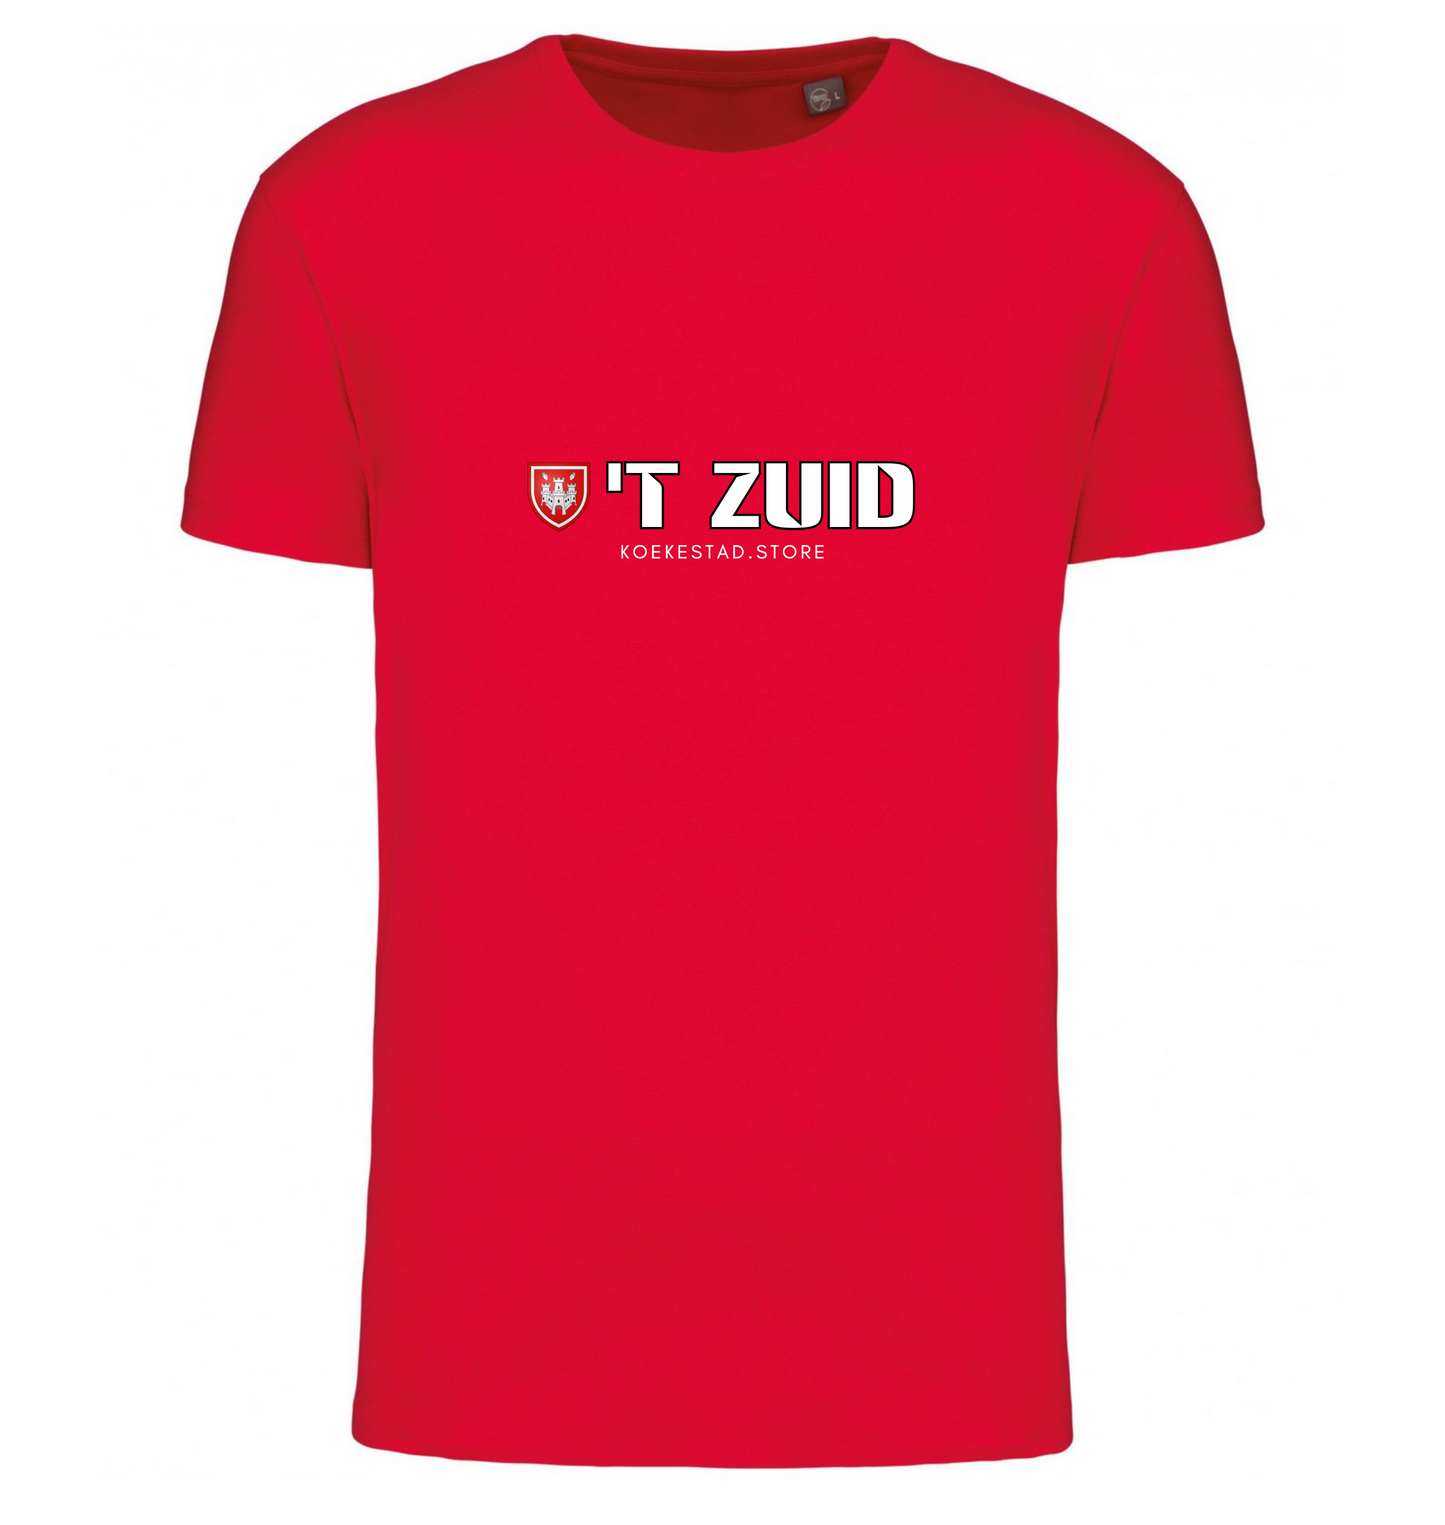 Premium T-Shirt - T ZUID wijk - 100 % Biokatoen Unisex